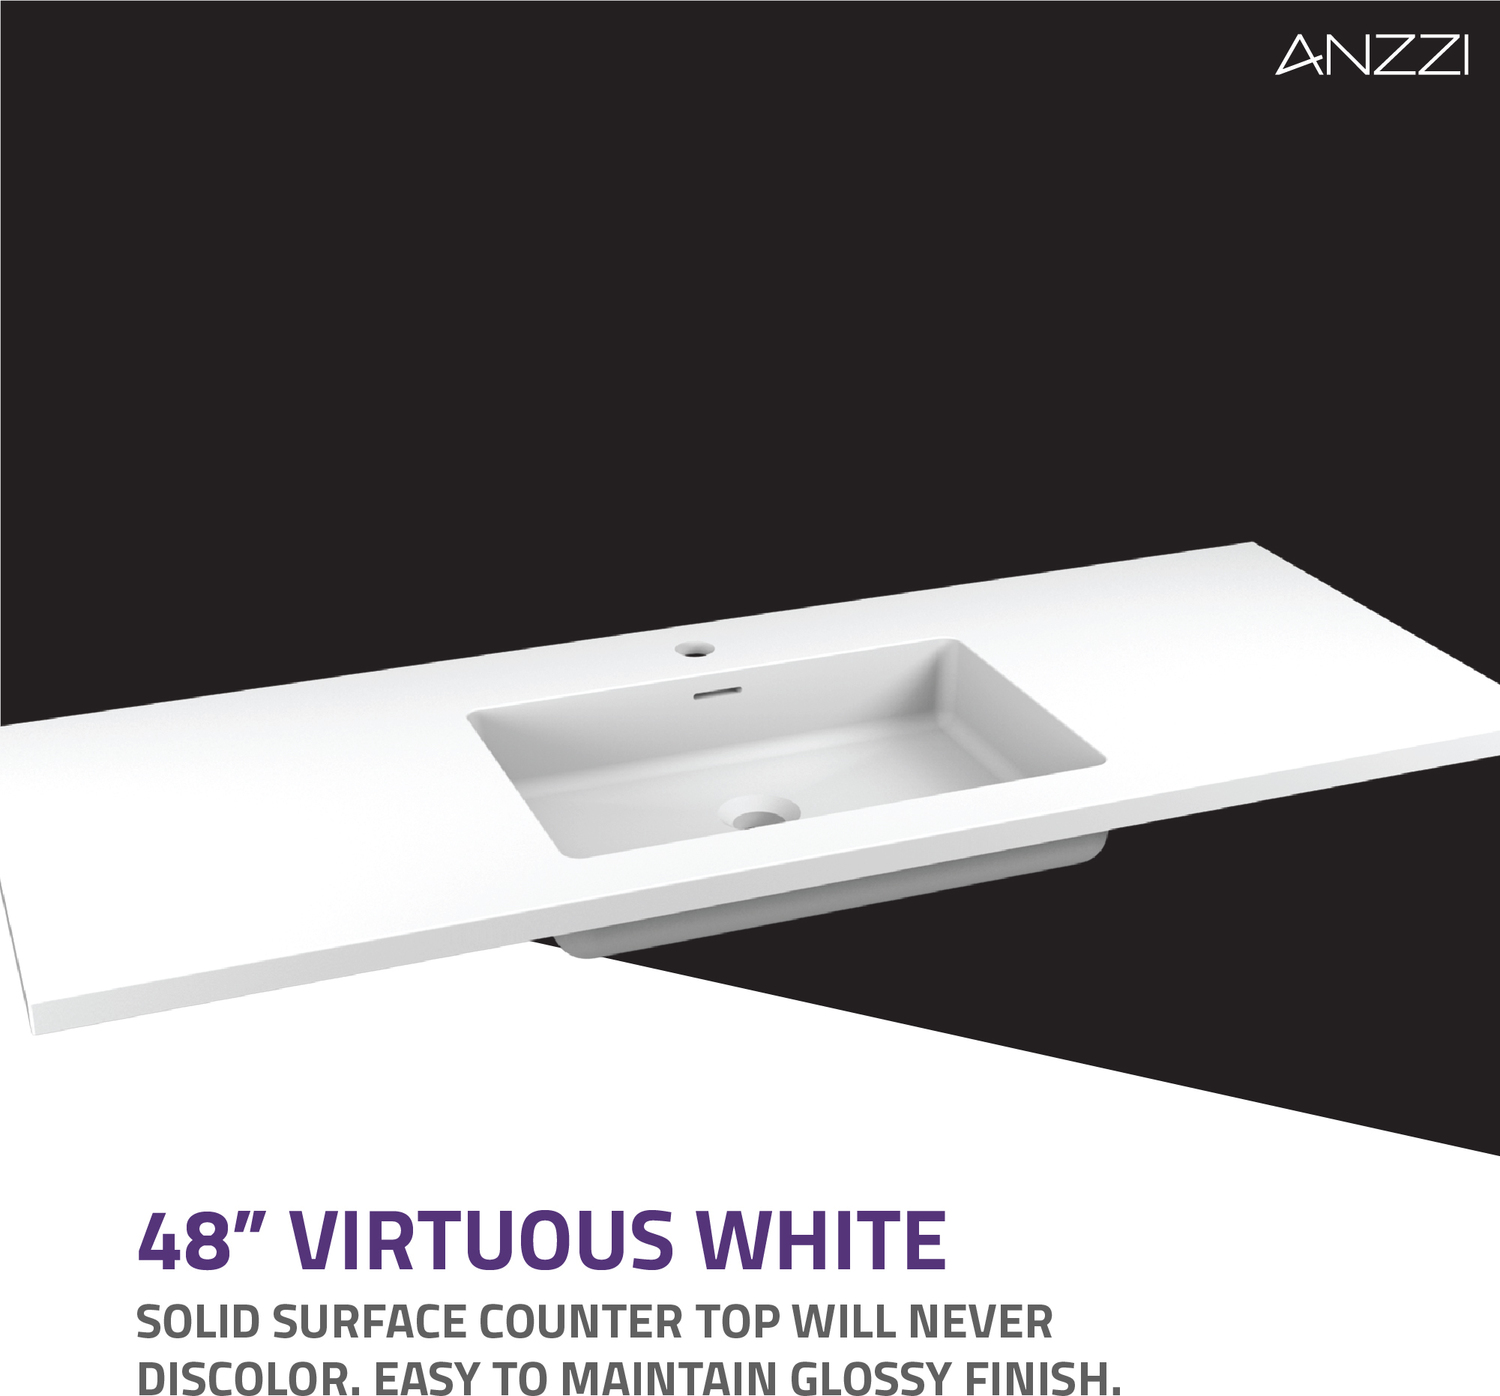 50 inch double vanity Anzzi BATHROOM - Vanities - Vanity Sets White